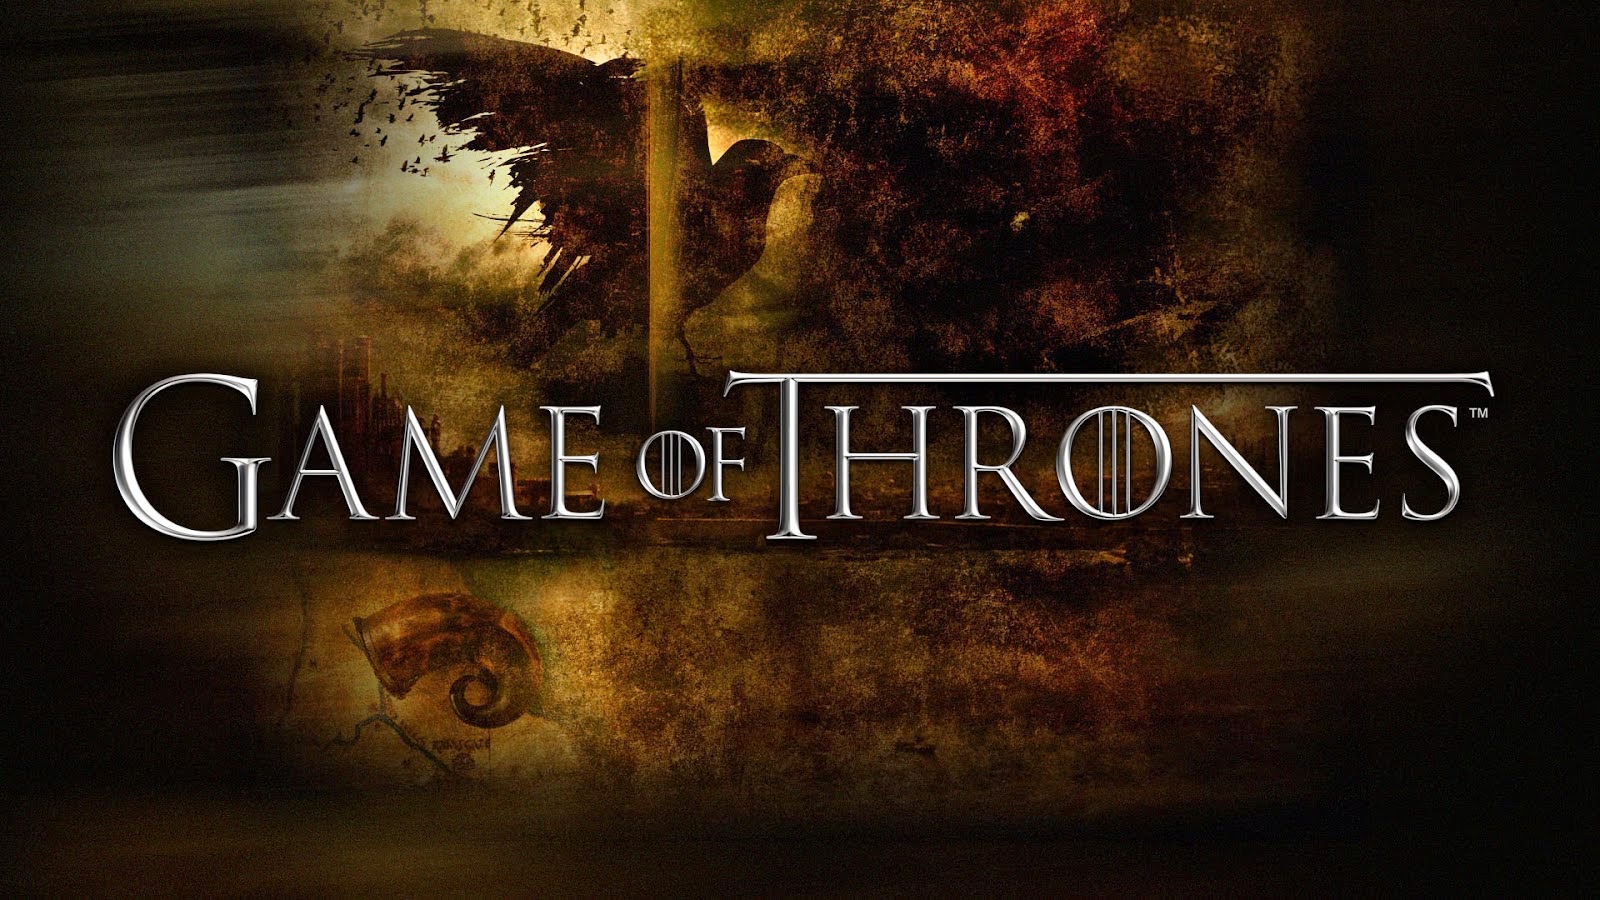 Game Of Thrones Season 1 Episode 2 Putlocker |LINK| Watch%2BGame%2Bof%2BThrones%2BSeason%2B5%2BEpisode%2B2%2BOnline%2BFree